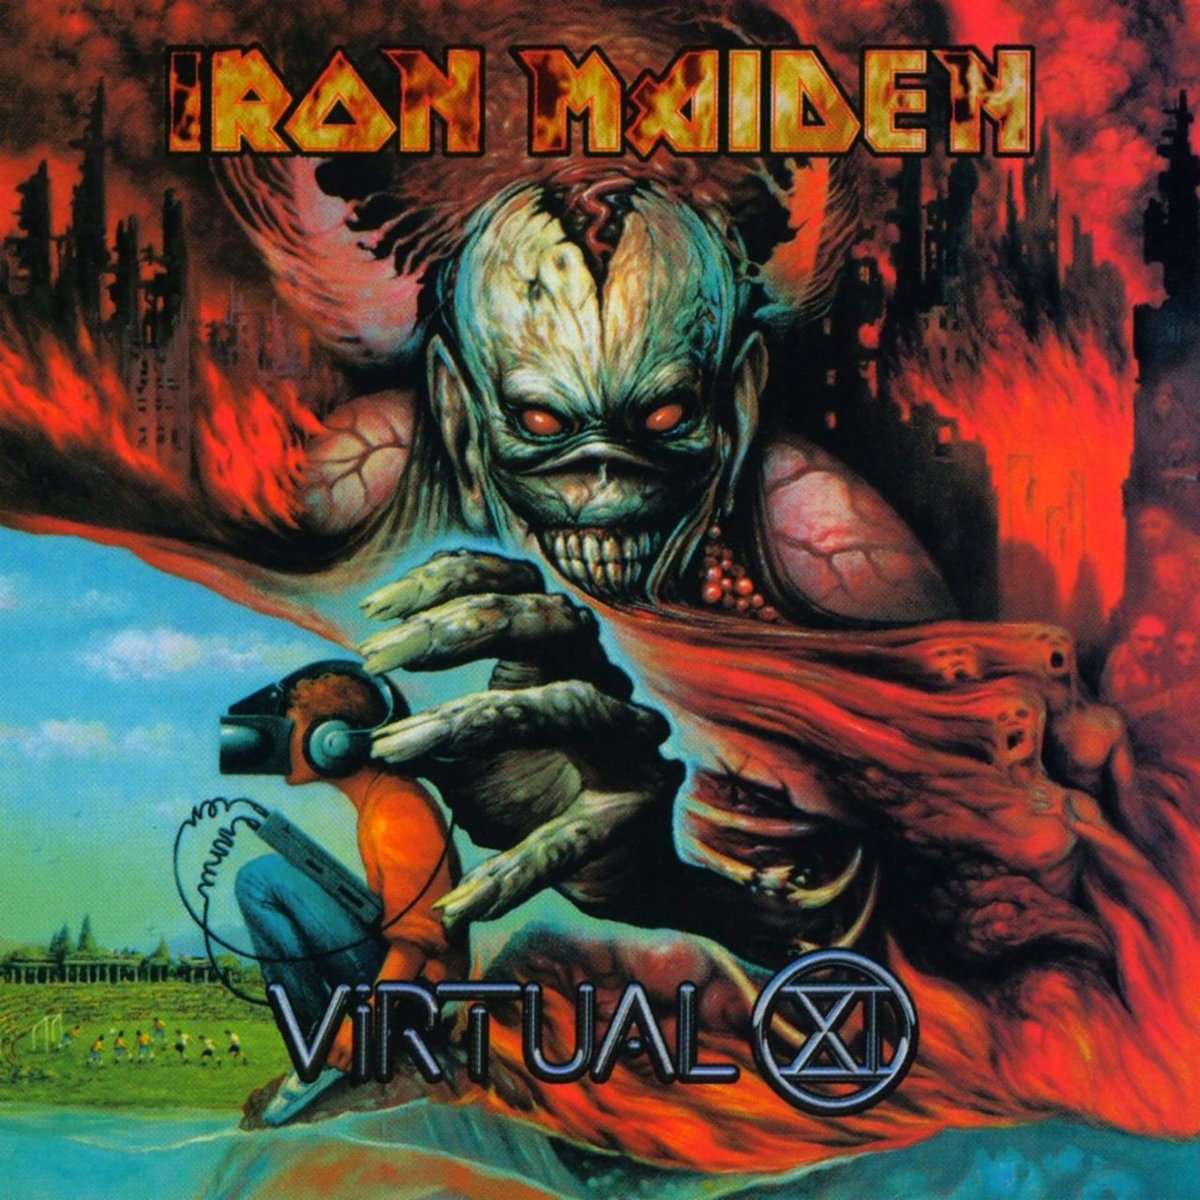 Virtual XI, é o 11° álbum de estúdio do Iron Maiden, e o último (de dois álbuns) com o vocalista Blaze Bayley. Foi lançado no dia 23 de Março de 1998. #IronMaiden #VirtualXI